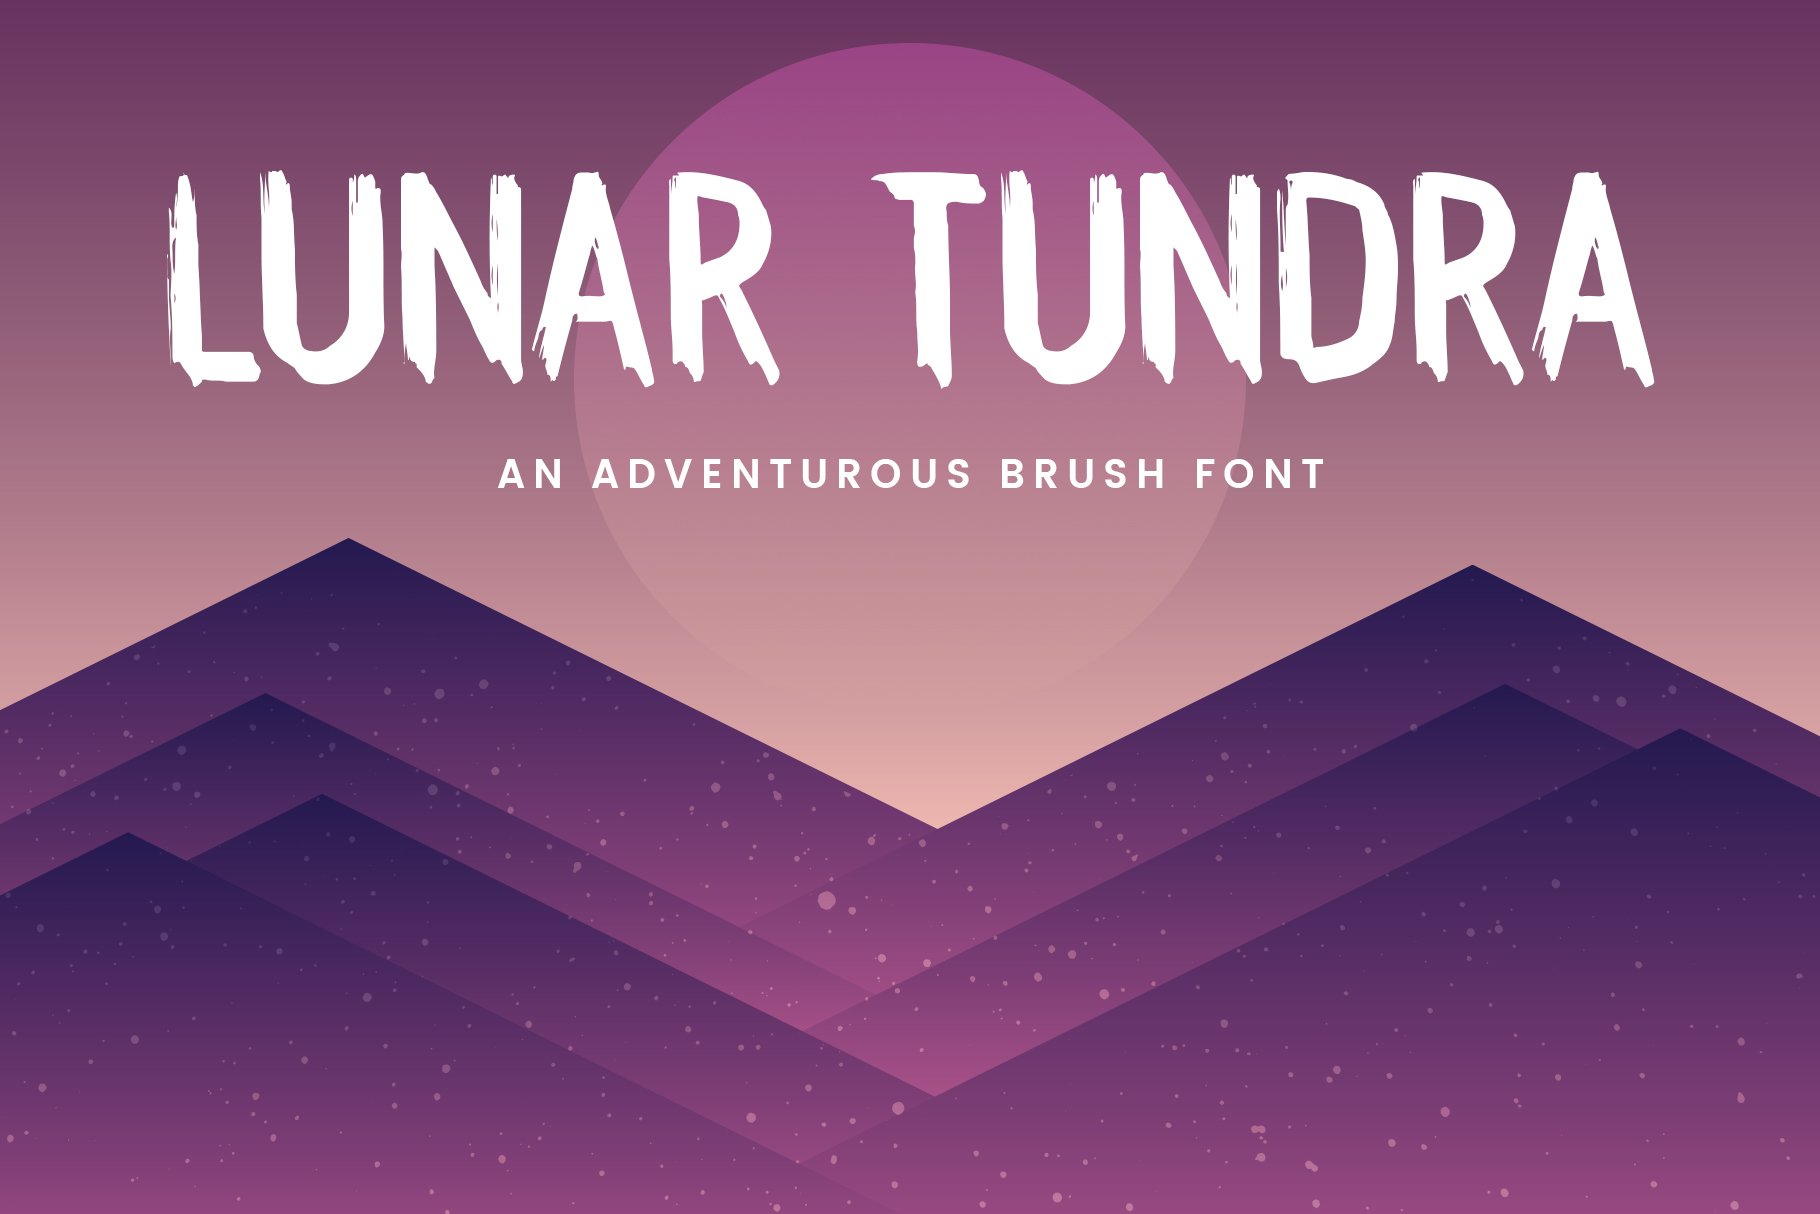 Lunar Tundra Brush Font cover image.